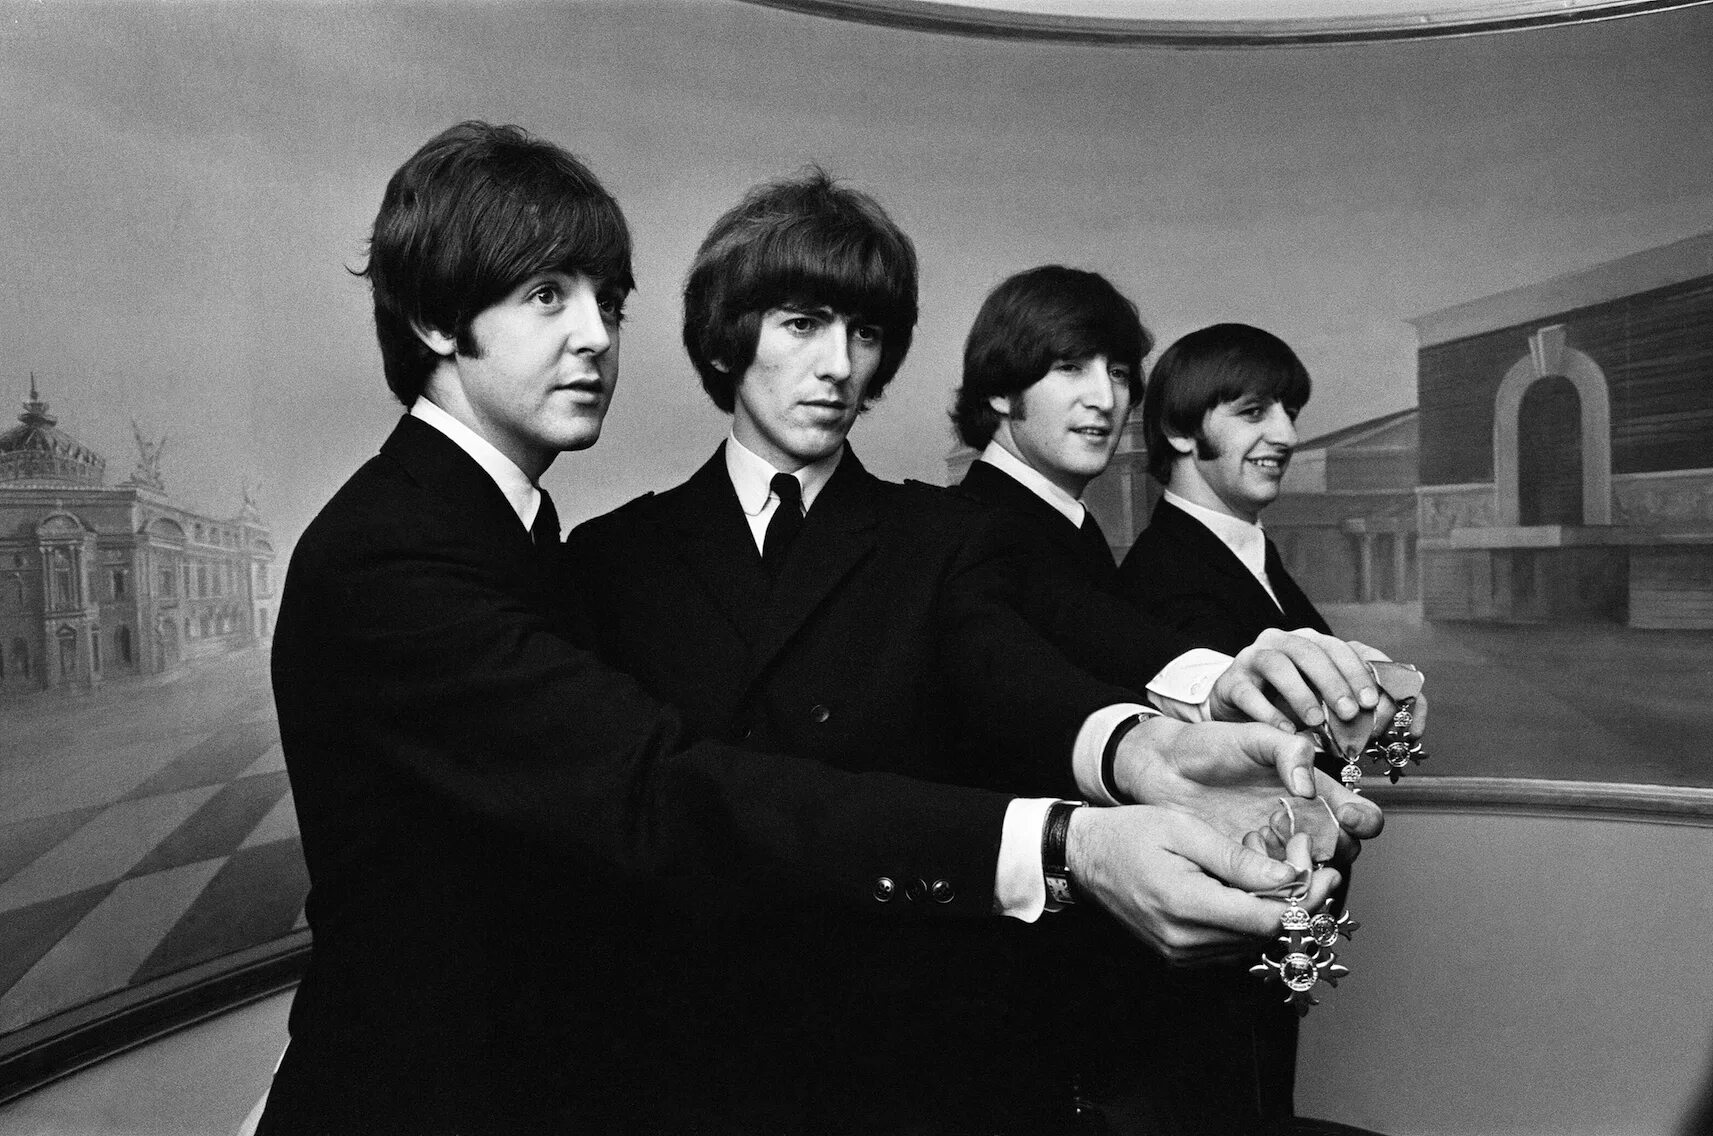 Группа the beatles состав. Битлз 1965. Великолепная четверка Битлз. Битлз 1961 год. Группа the Beatles.